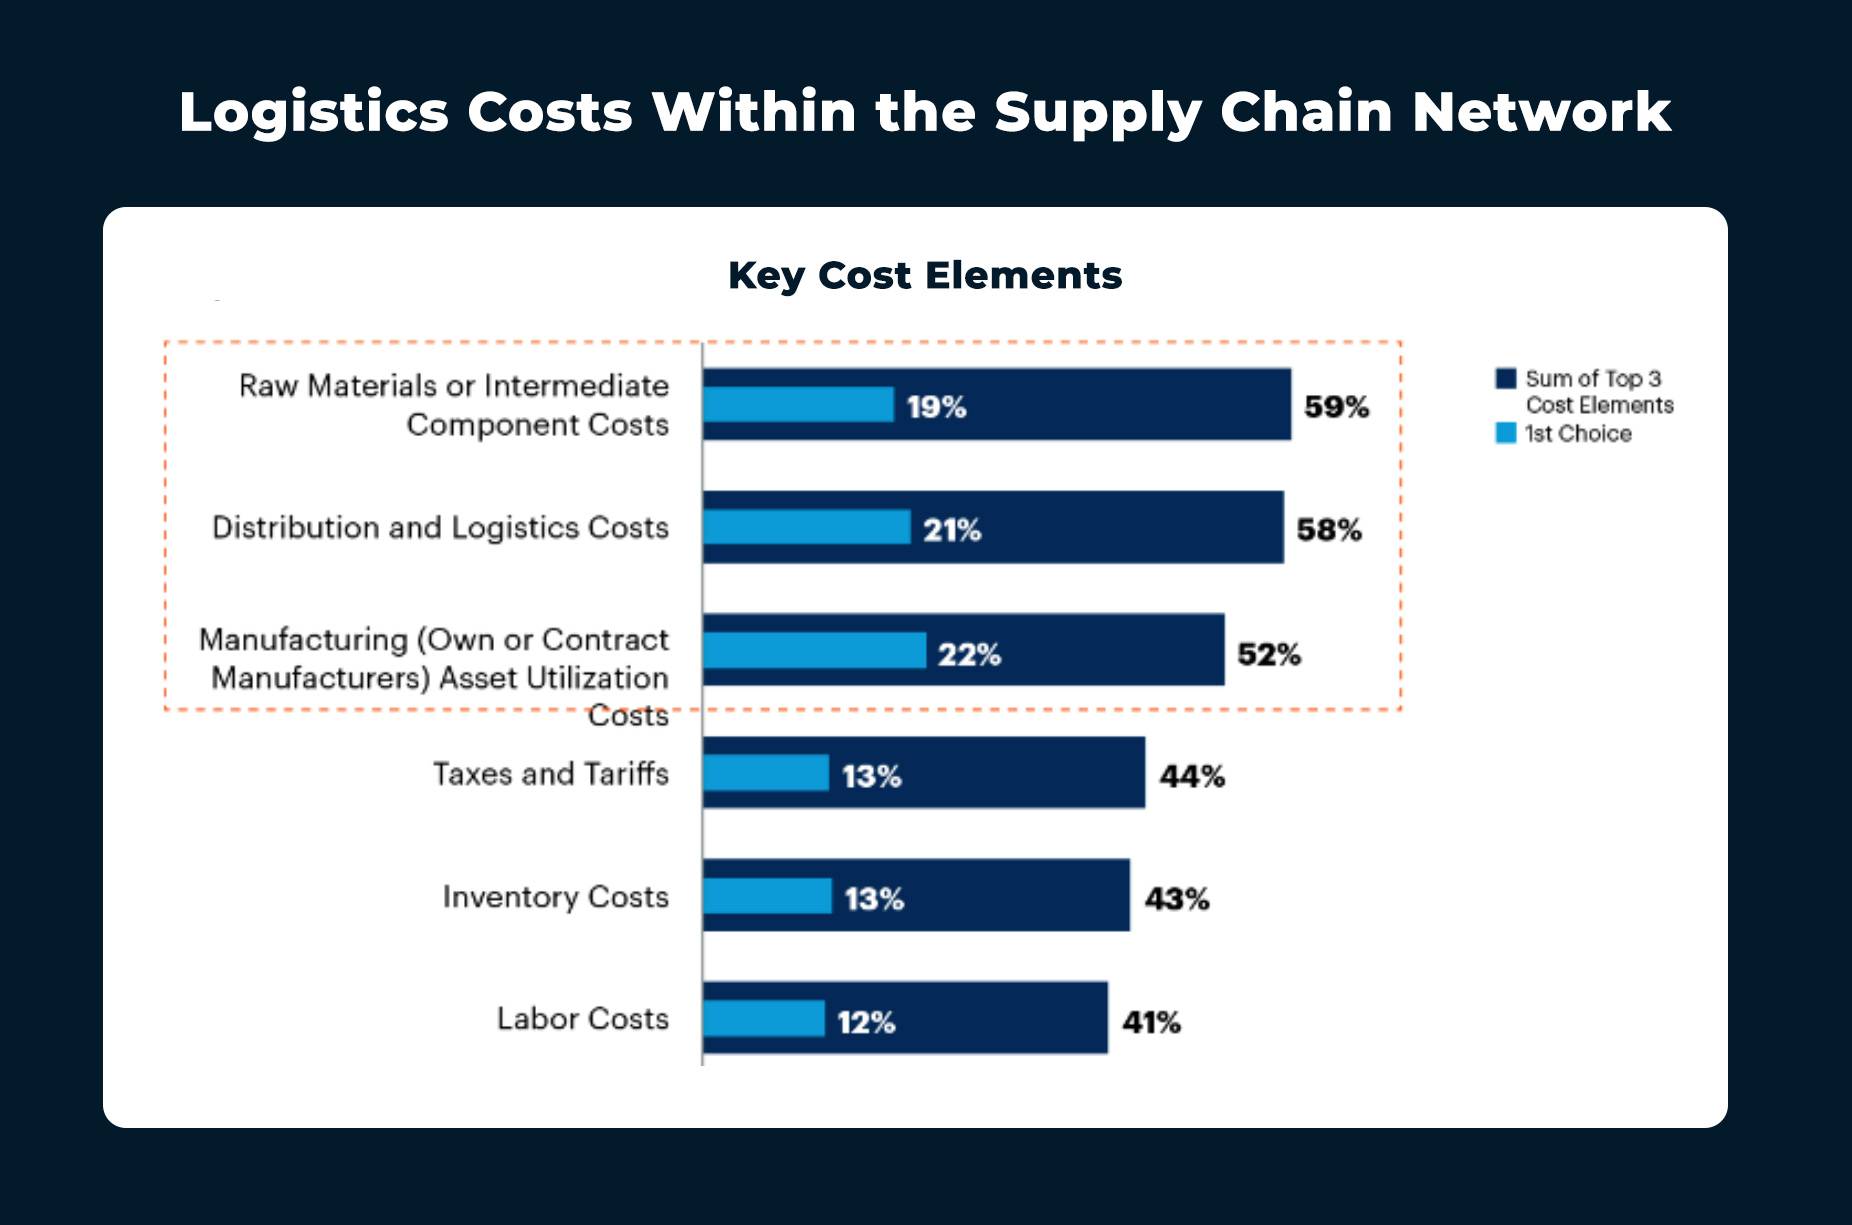 Major cost contributors in Supply Chain Network